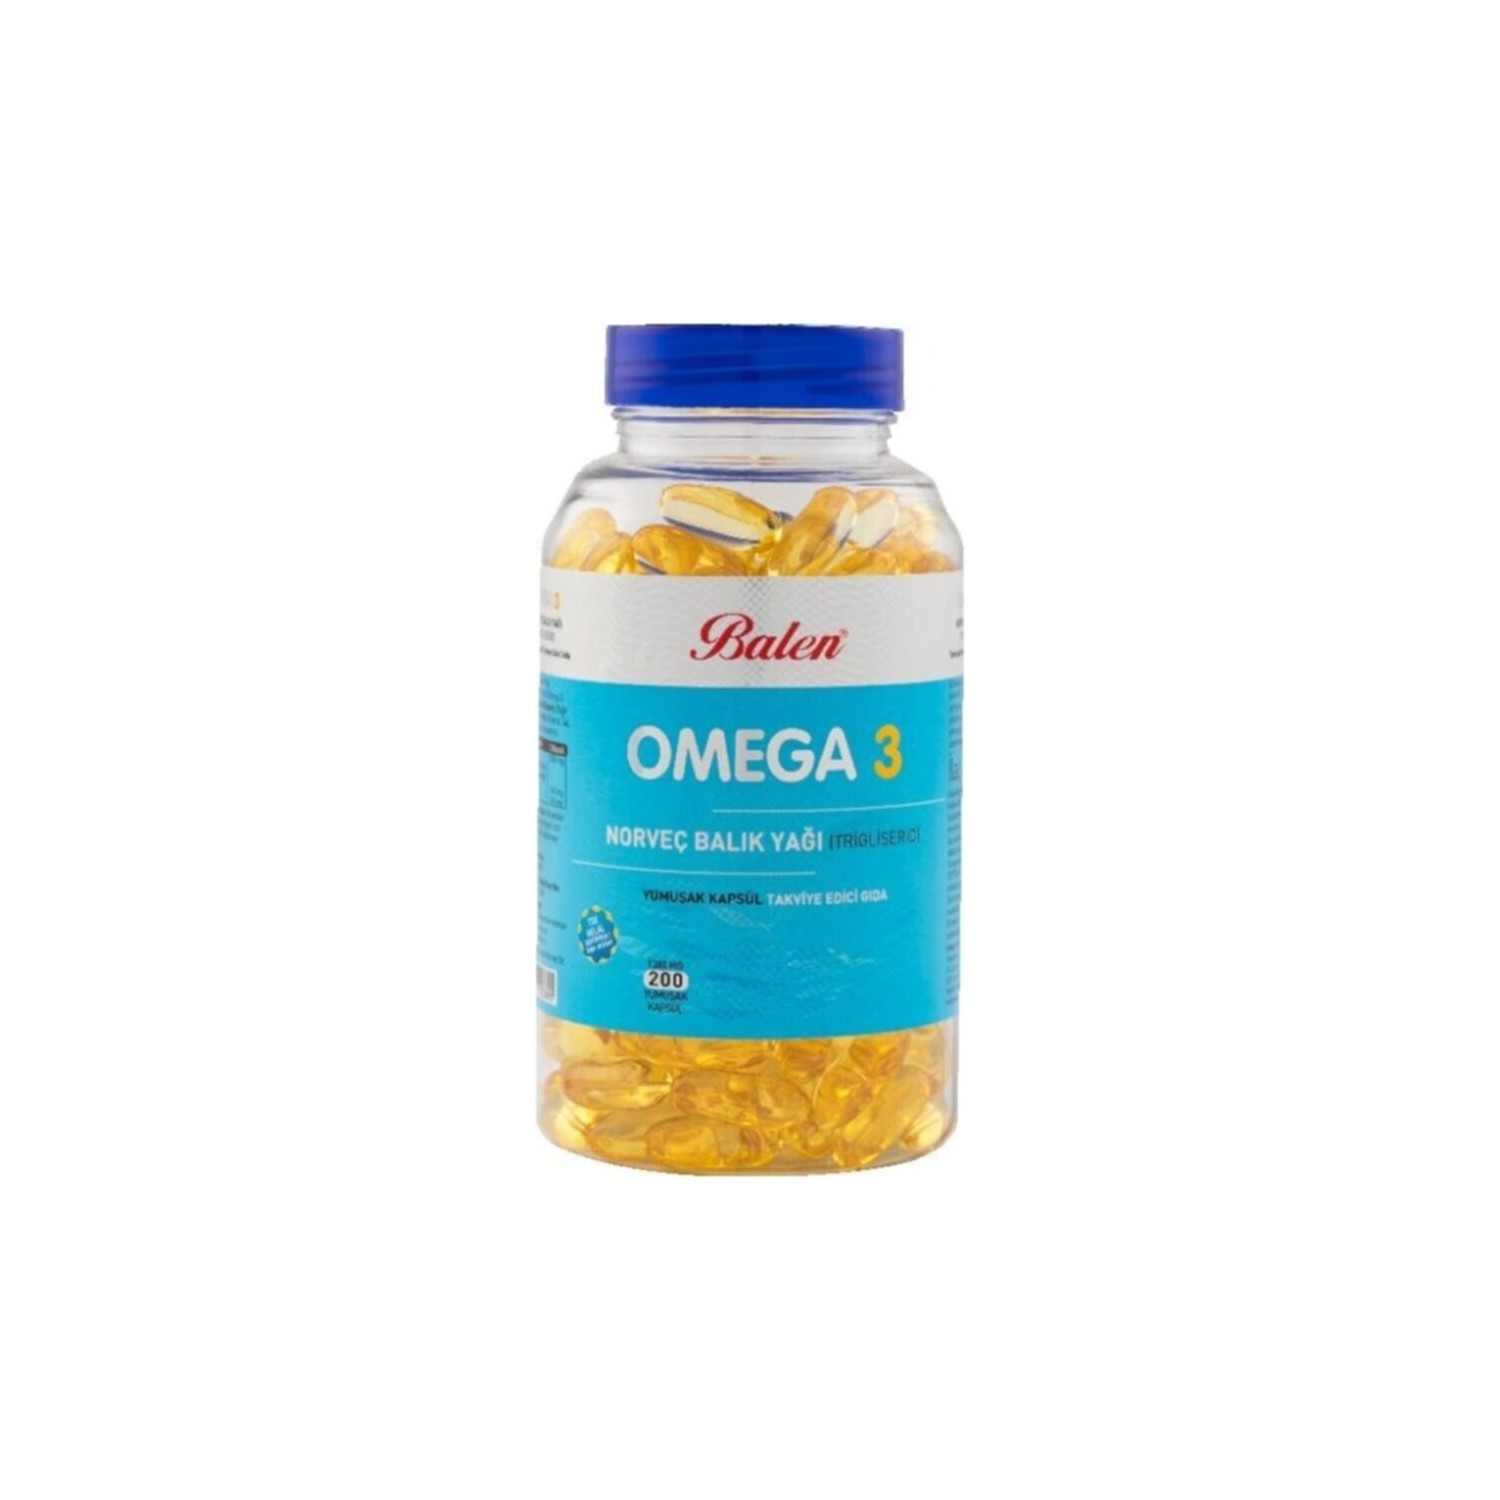 Рыбий жир Balen Omega 3, 200 капсул, 1380 мг норвежский рыбий жир balen omega 3 триглицерид 1380 мг 3 упаковки по 200 капсул